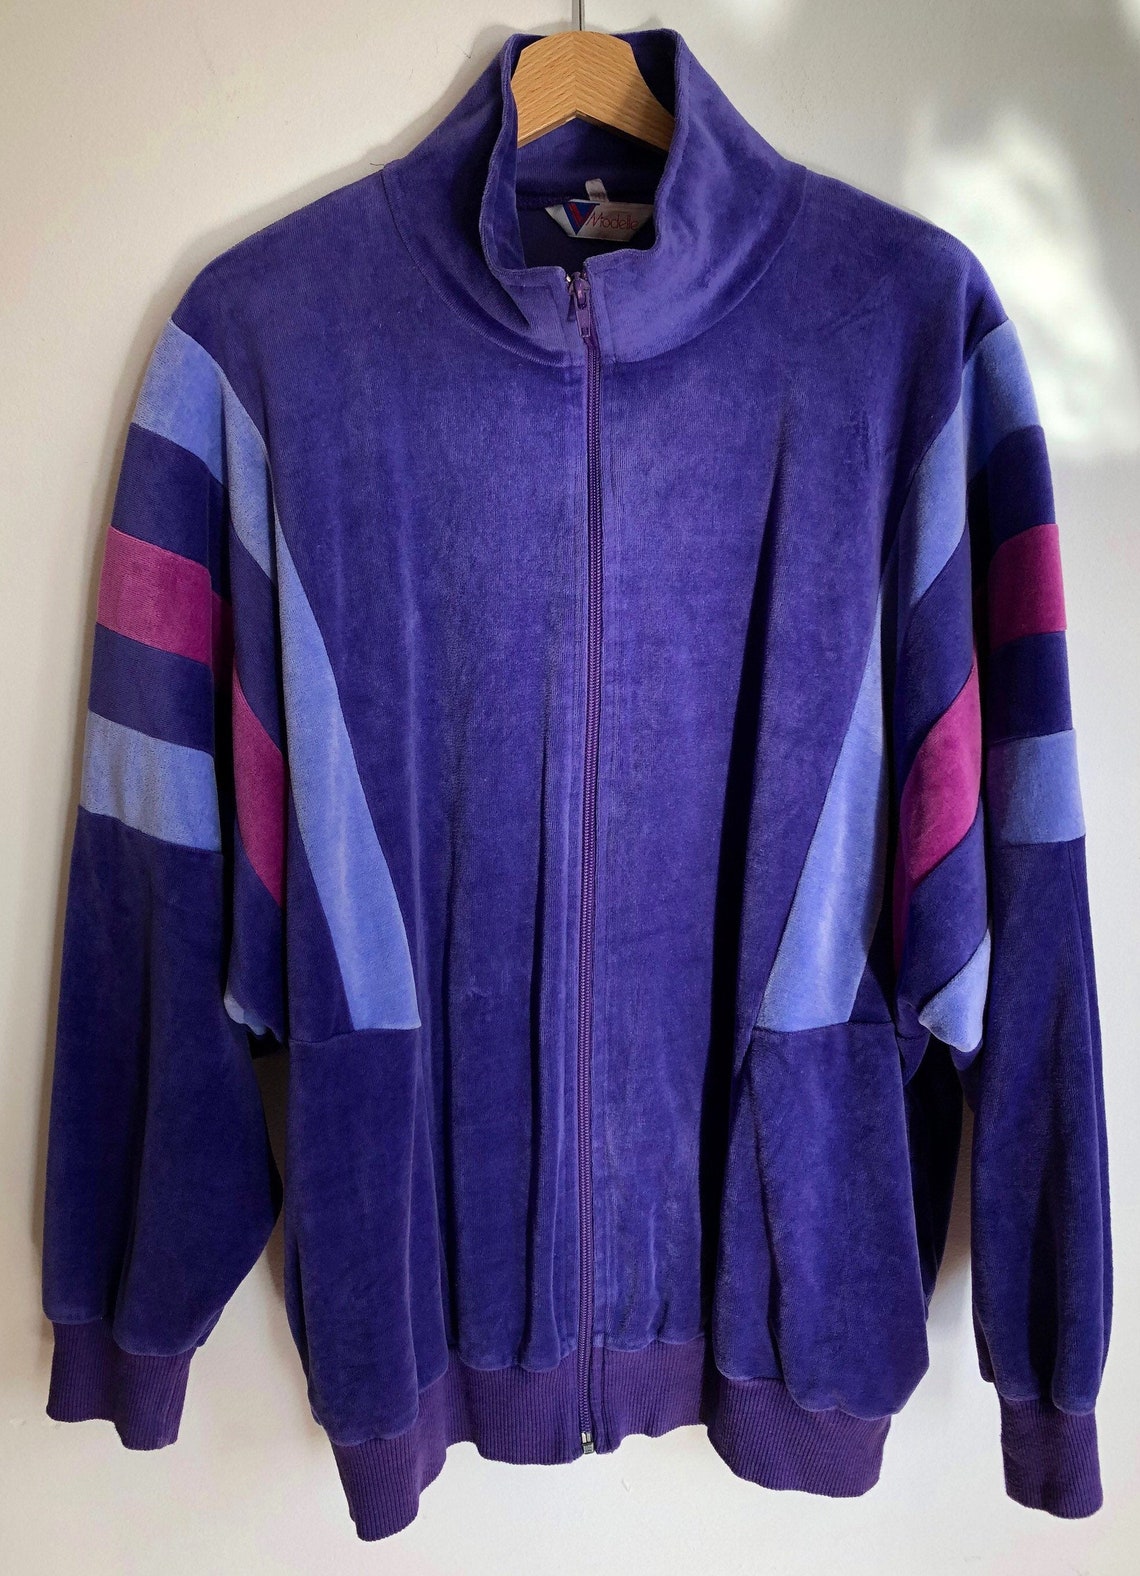 Vintage 80s Plush Sports Jacket Purple Hipster Style Jacket - Etsy